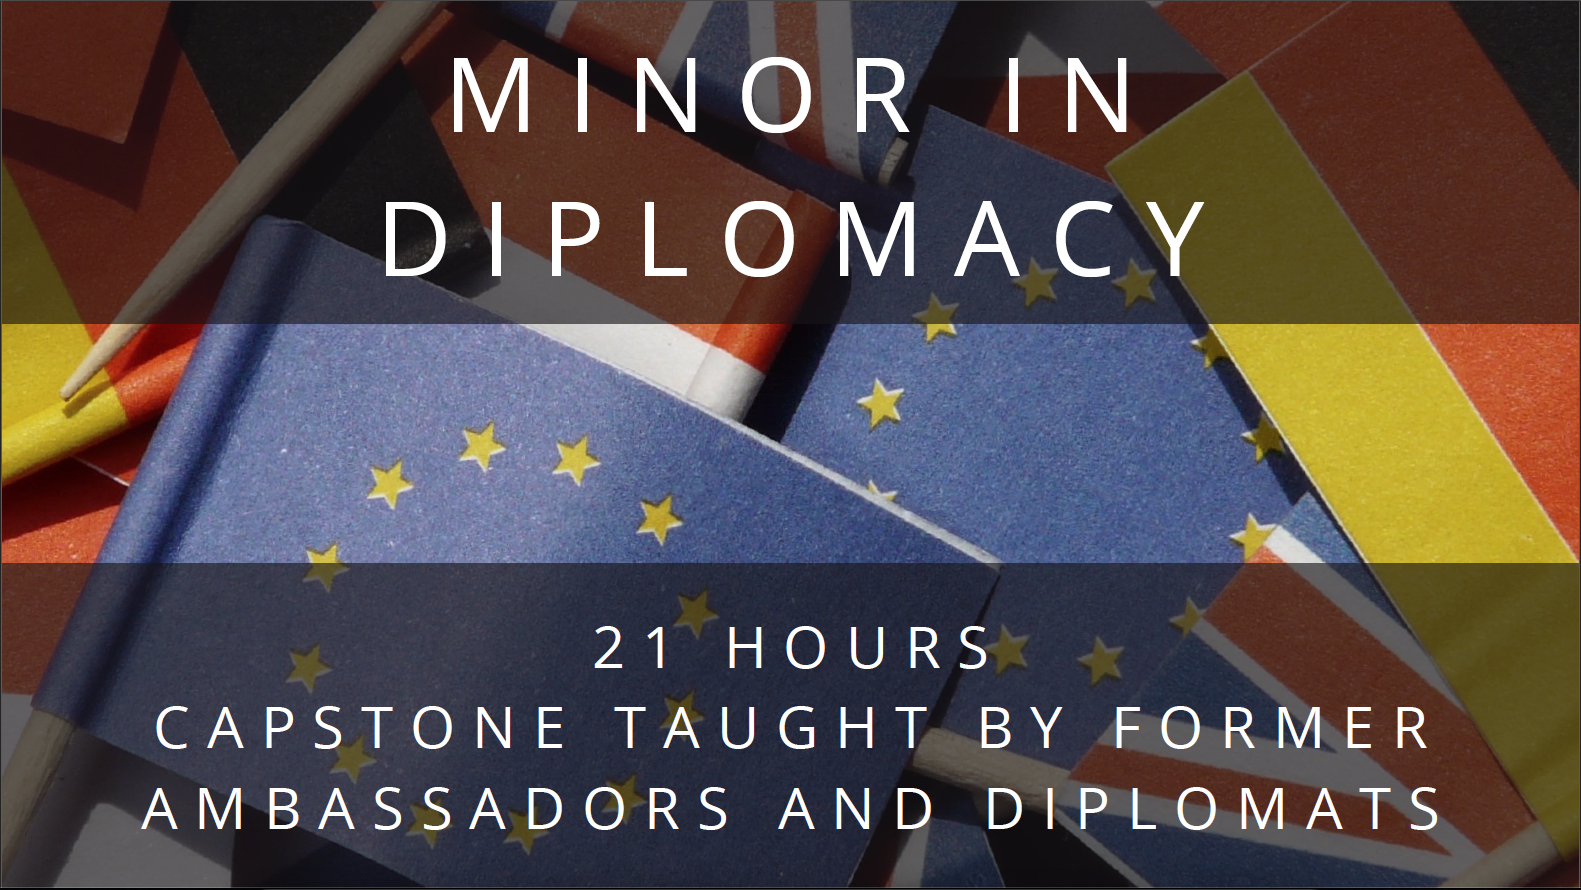 A screenshot advertising the Diplomacy minor